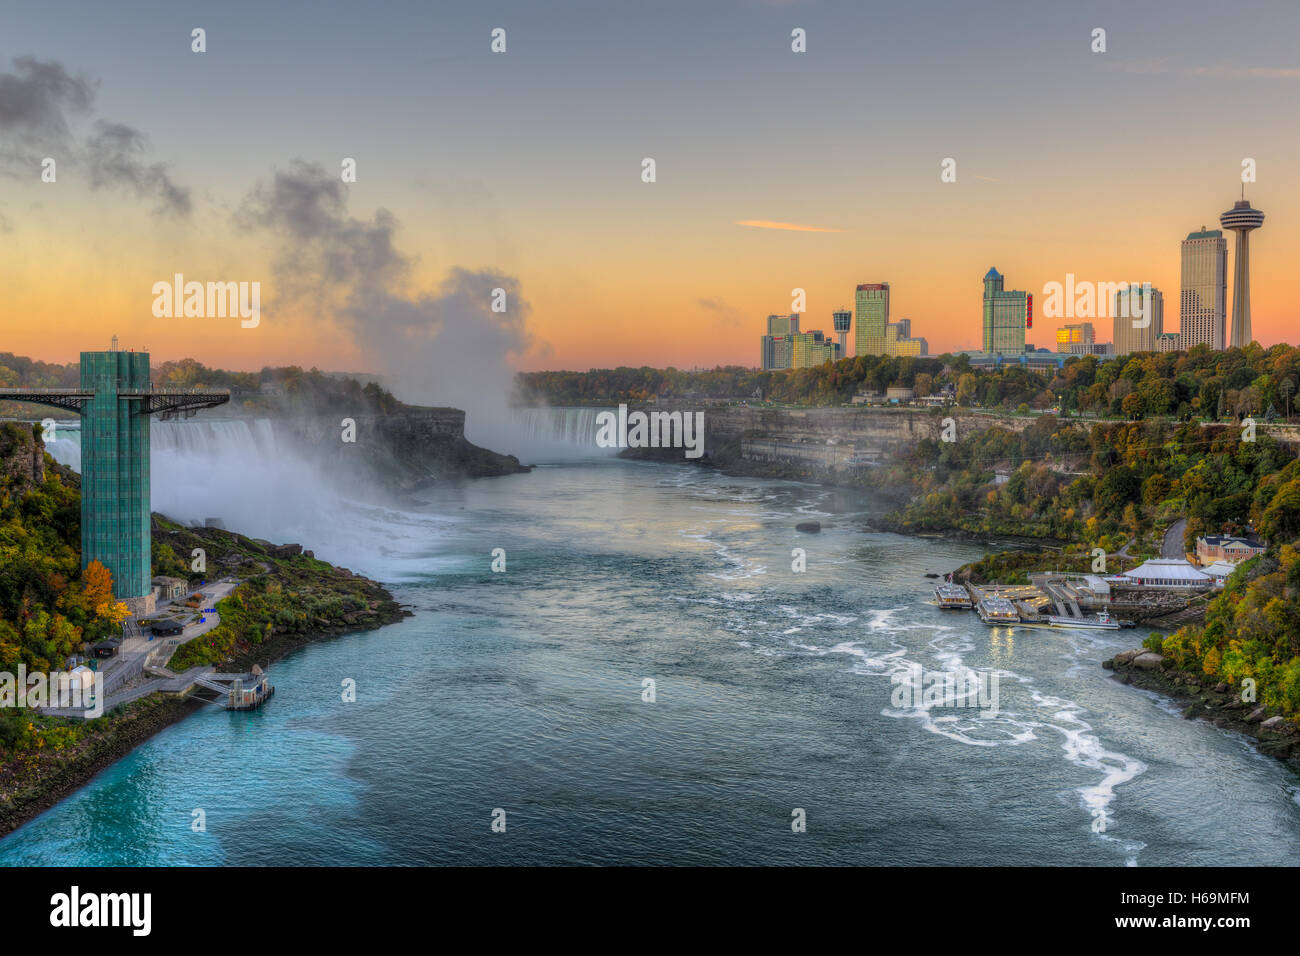 The Niagara River including the American Falls, Horseshoe Falls, and skyline of Niagara Falls, Ontario just before sunrise. Stock Photo